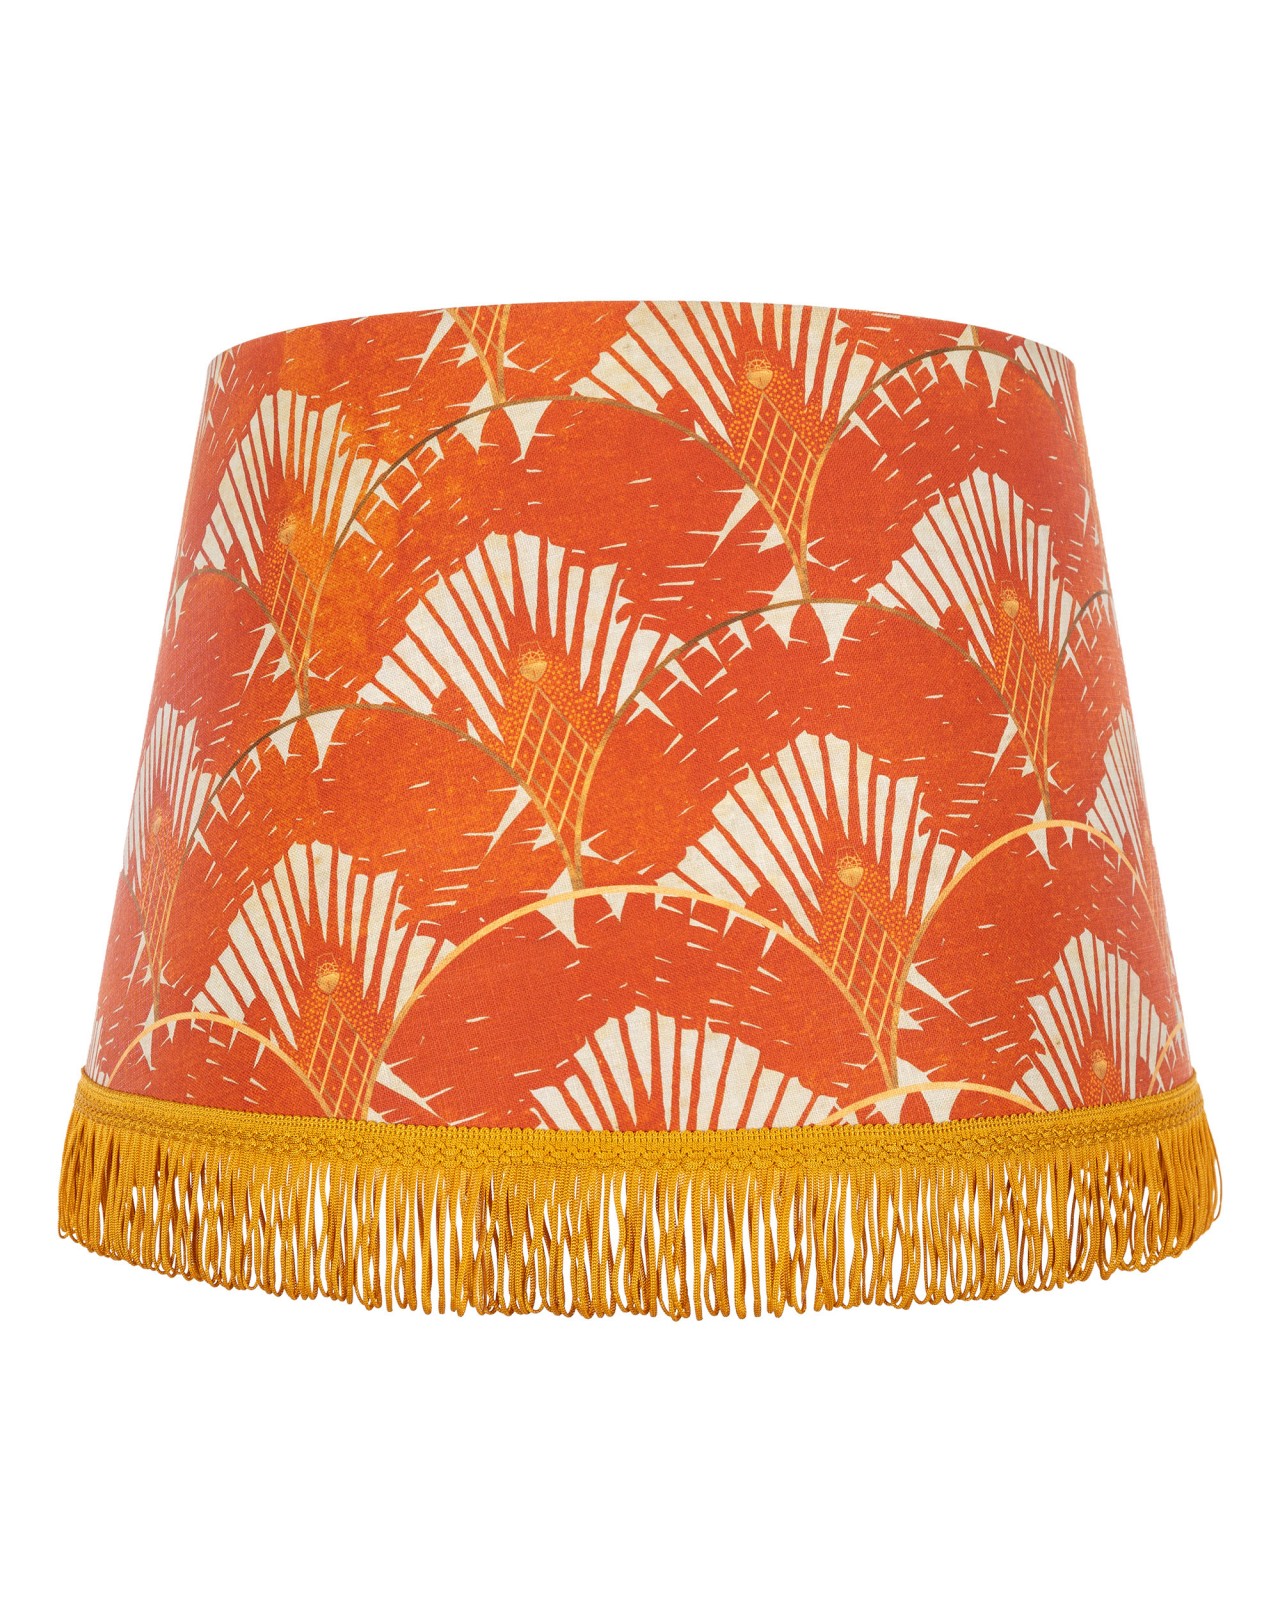 RAVENALA Orange EMPIRE Table Lamp